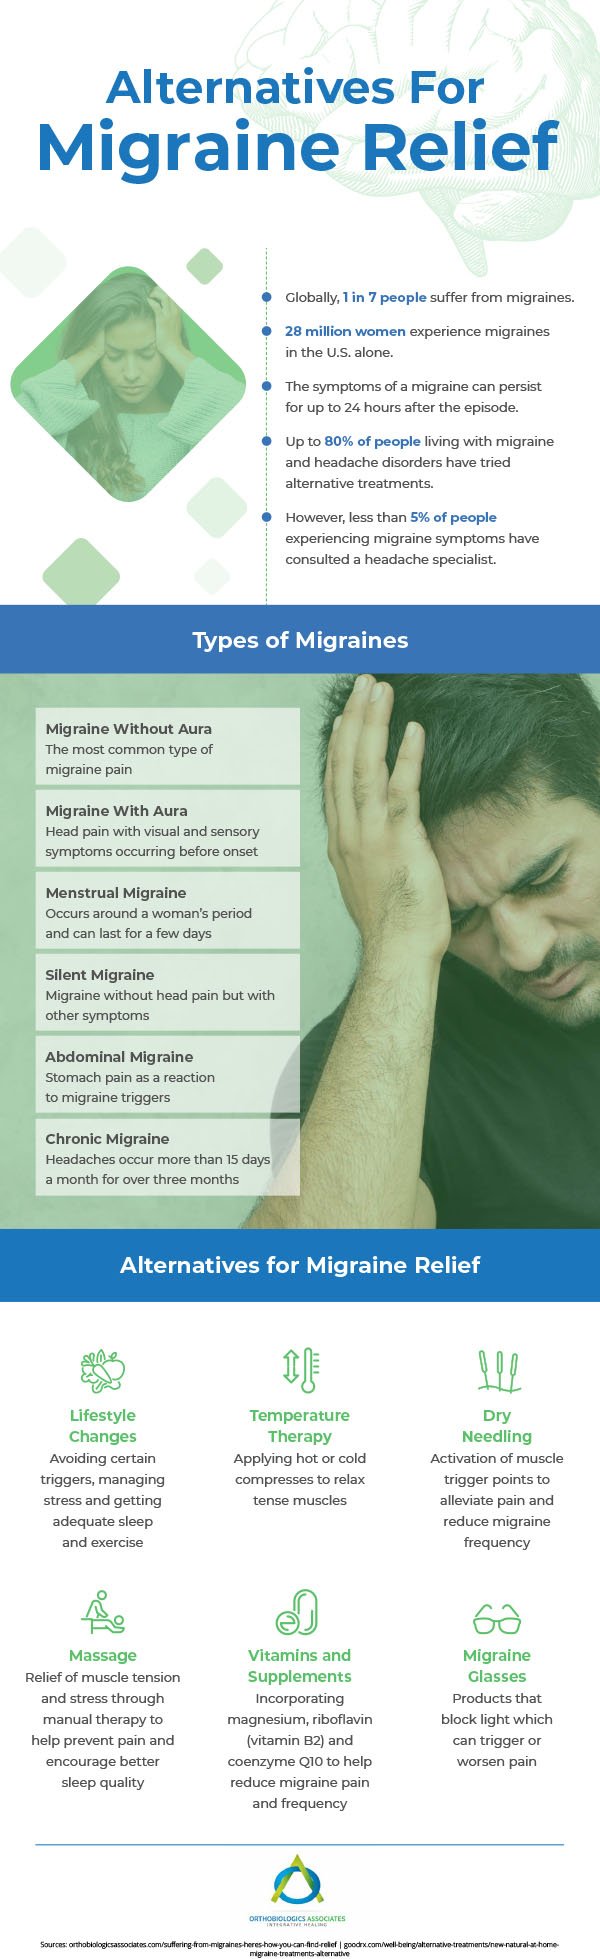 Alternatives For Migraine Relief